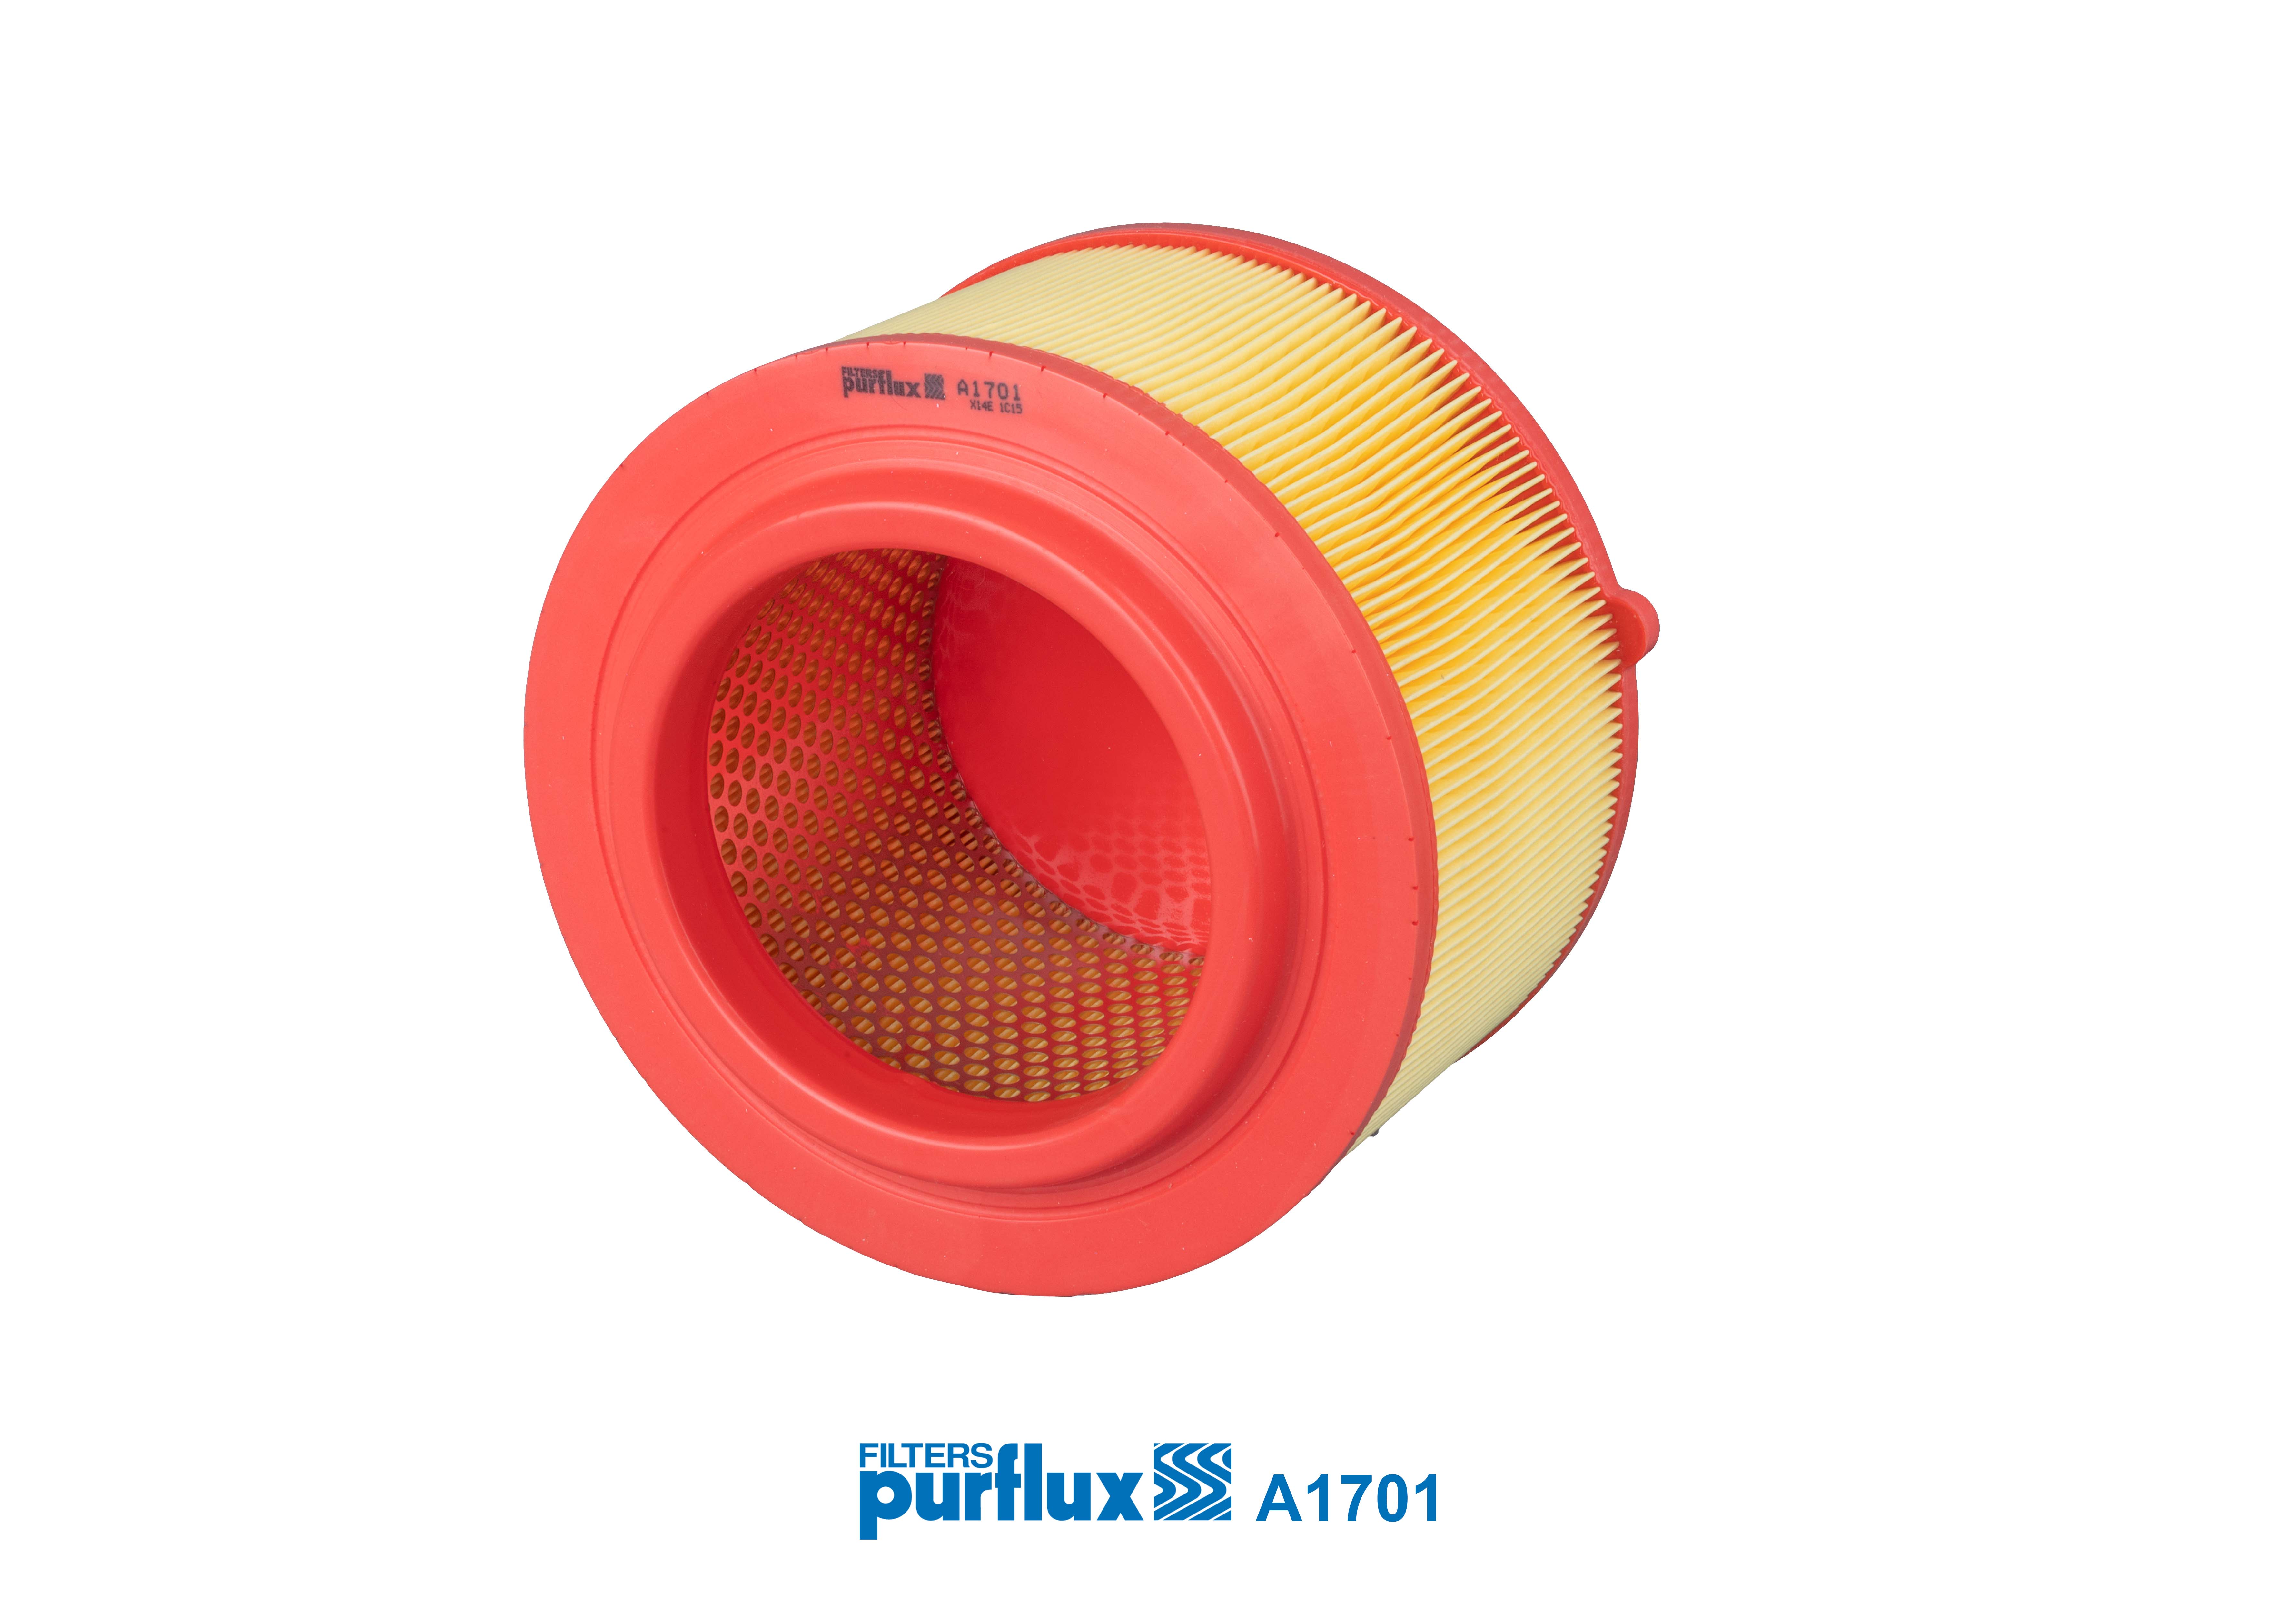 Purflux AH378 filtre cabine 